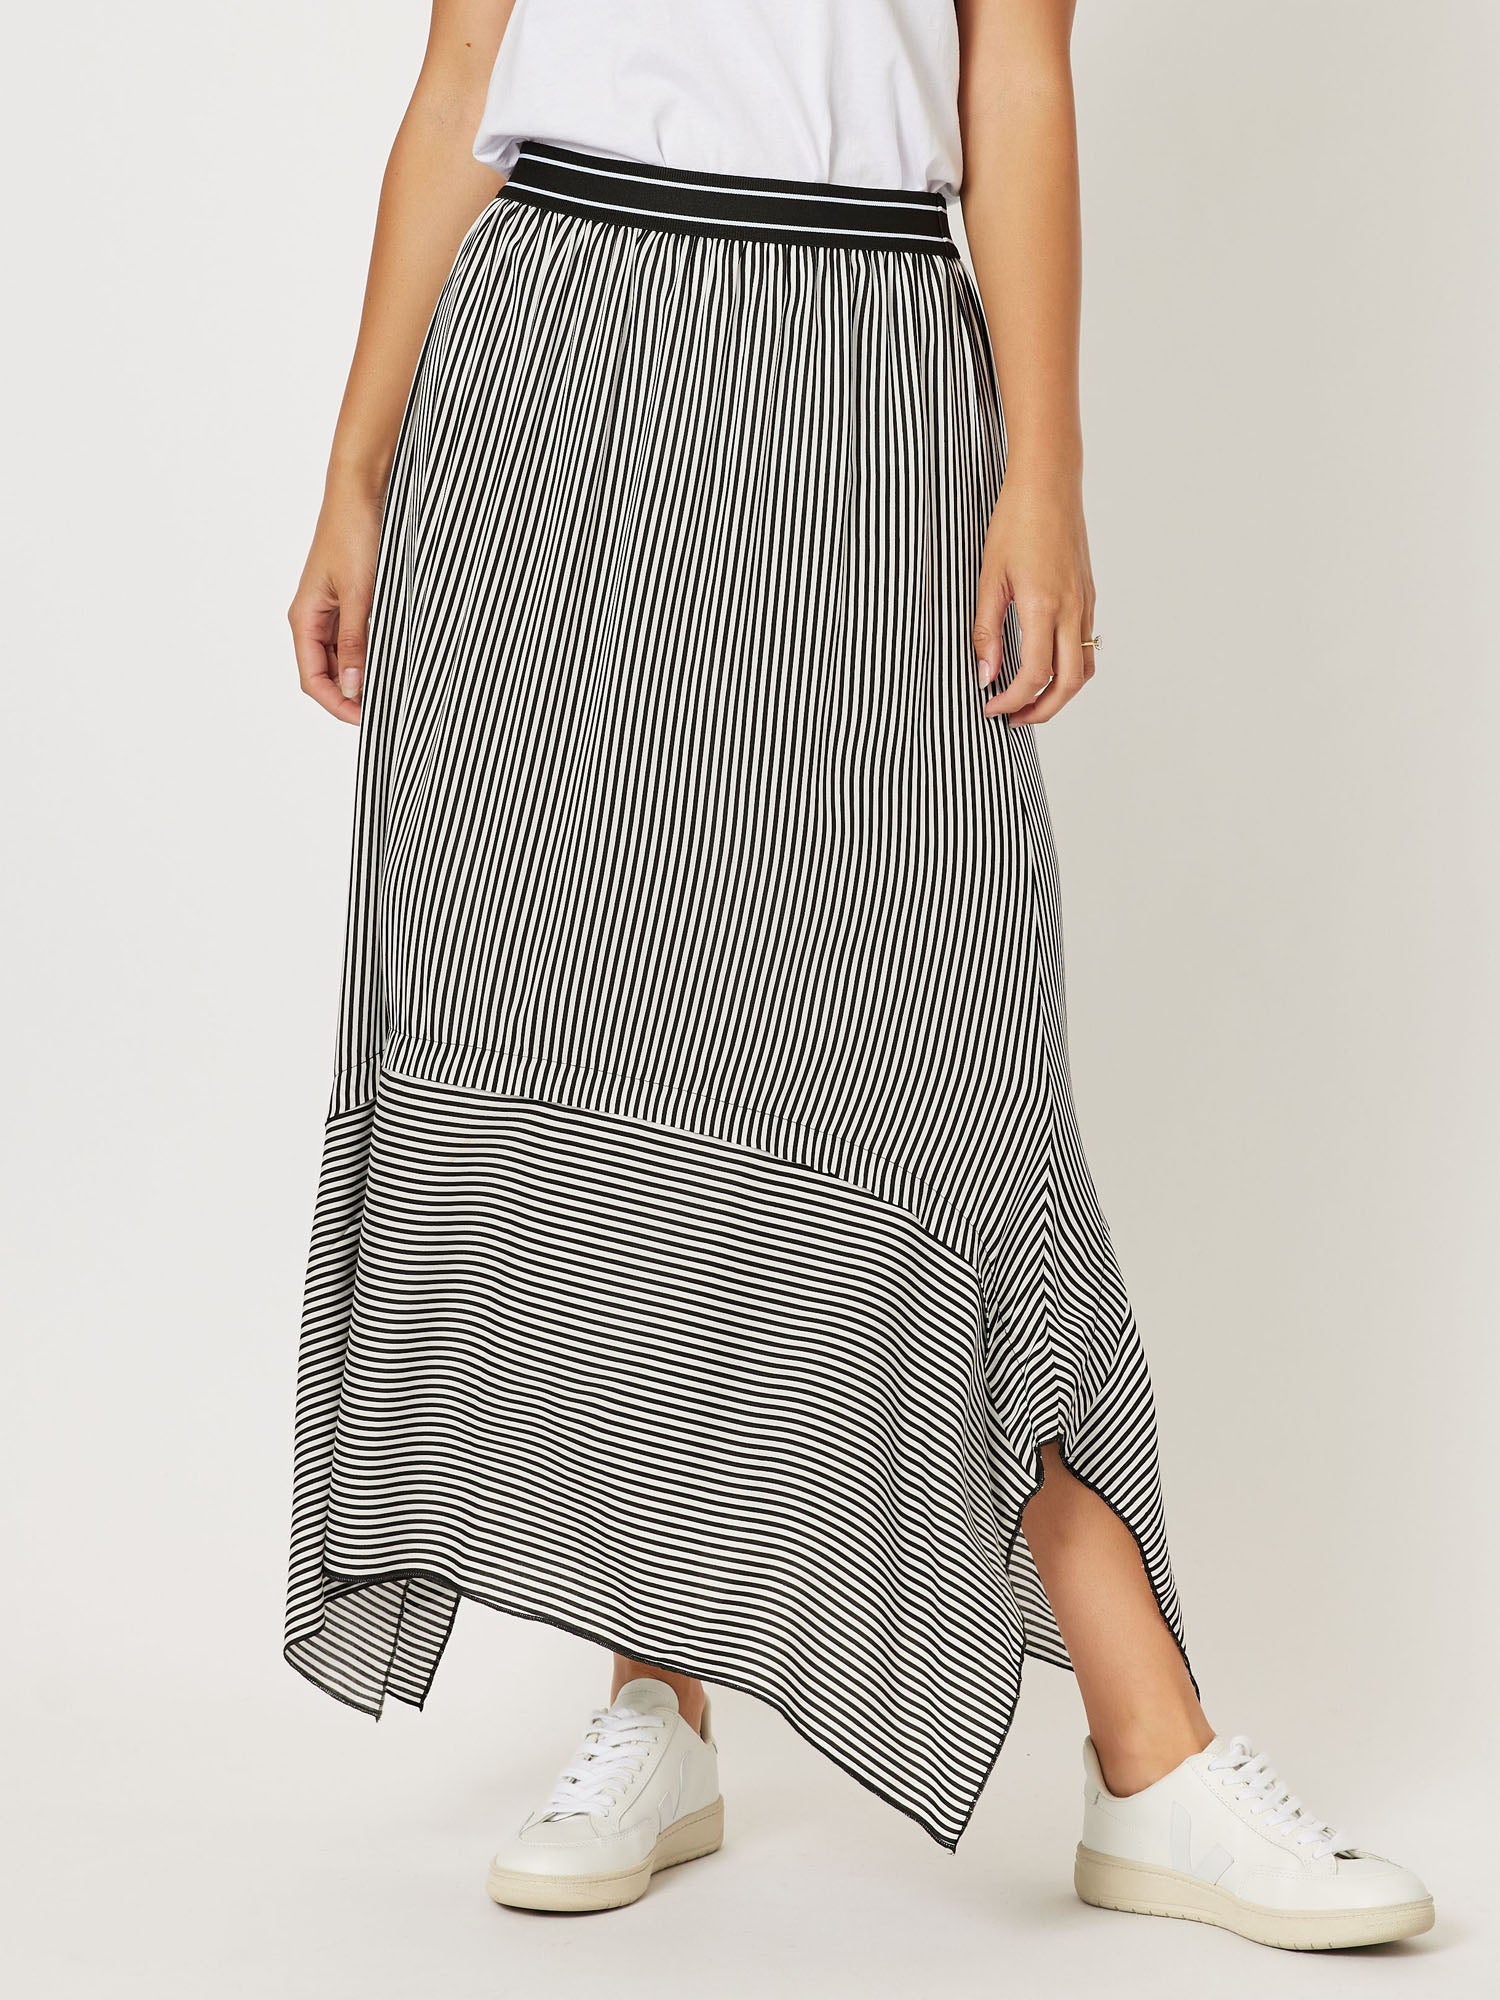 Chloe Stripe Asymmetric Skirt - Black/White